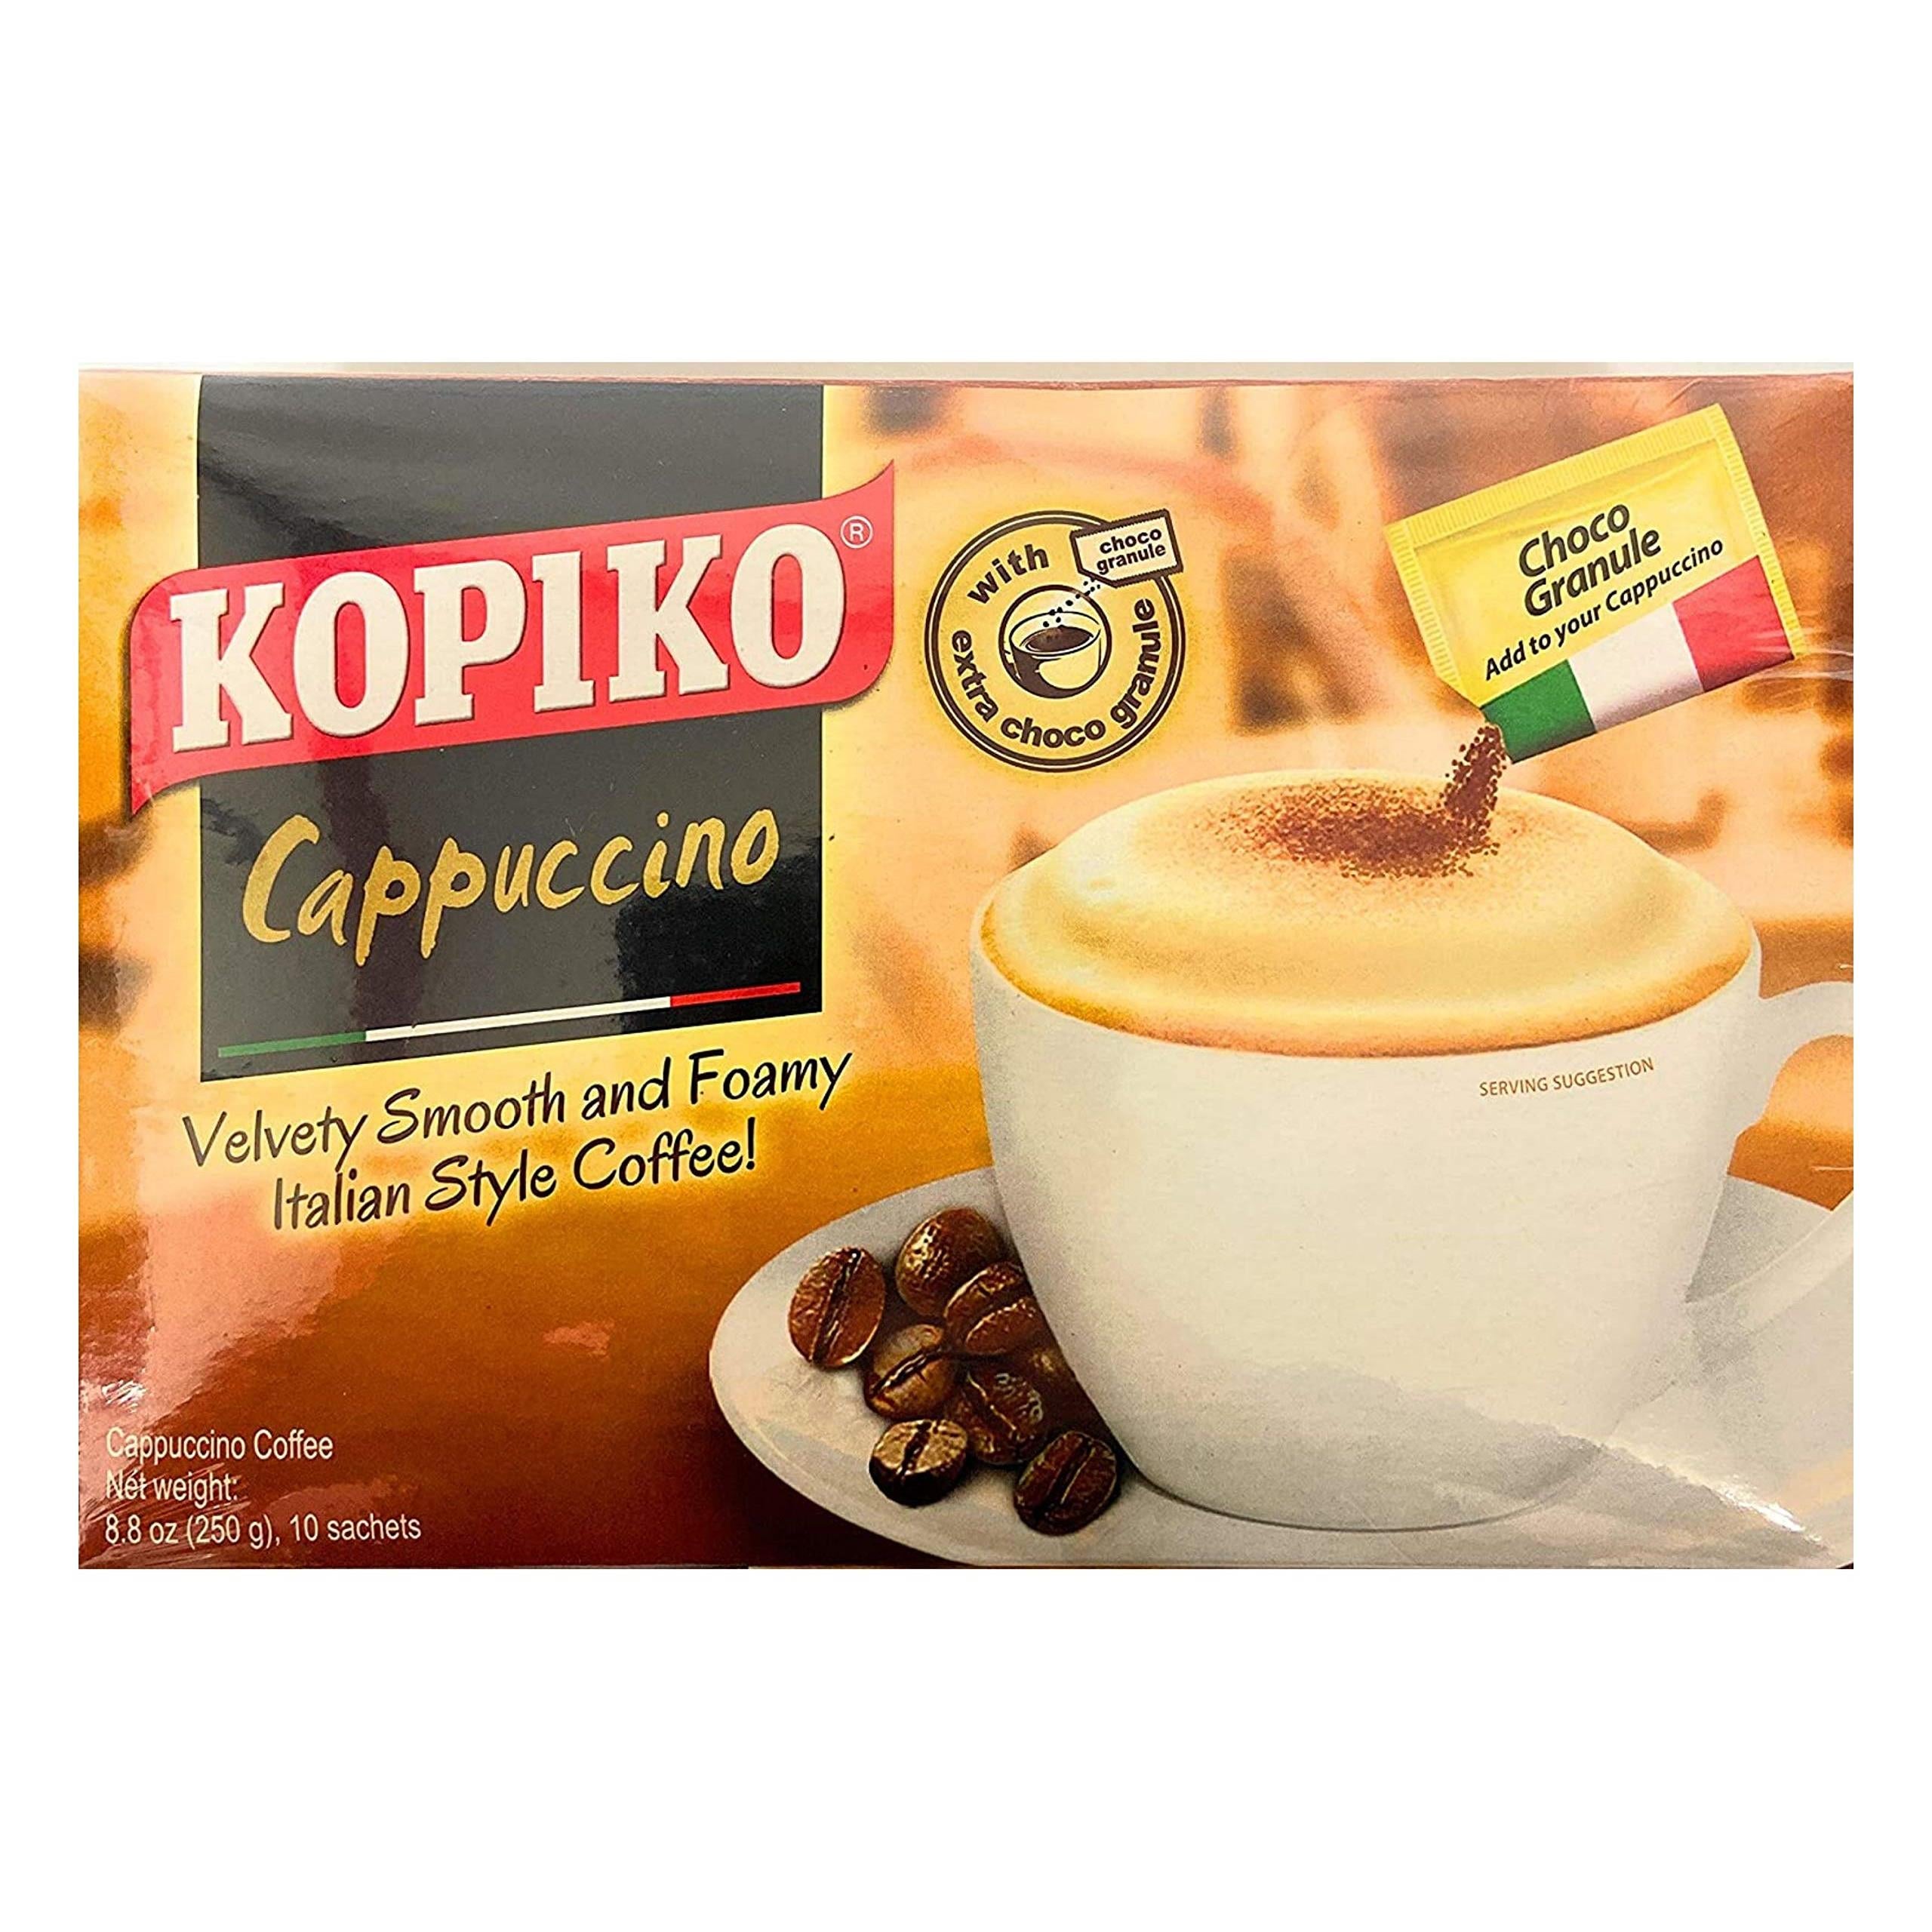 Kopiko Cappucinno Instant Coffee with Choco Ganule